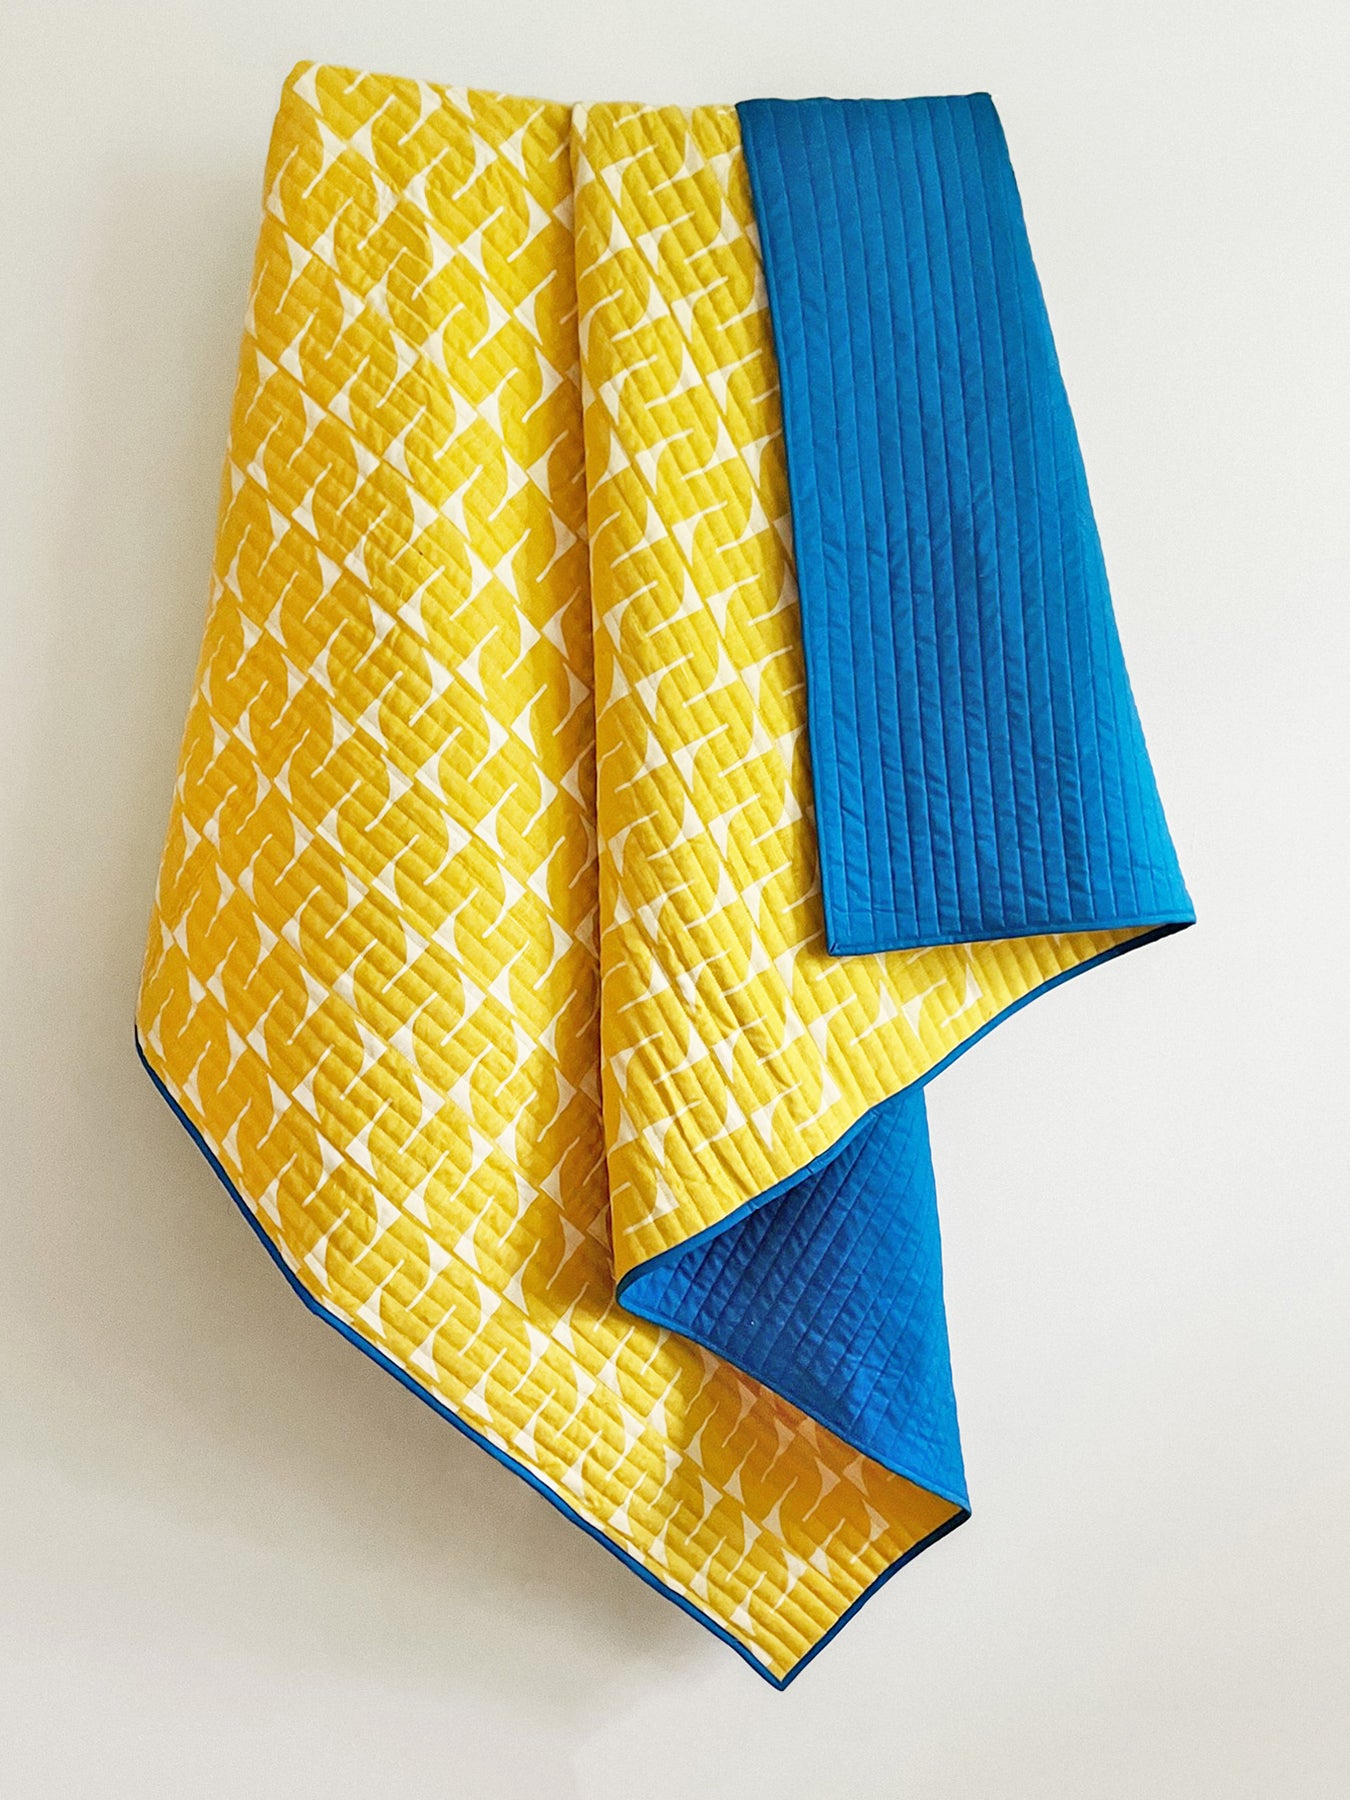 Good Quilt + Blue Skies Workroom, Meander print on yellow linen